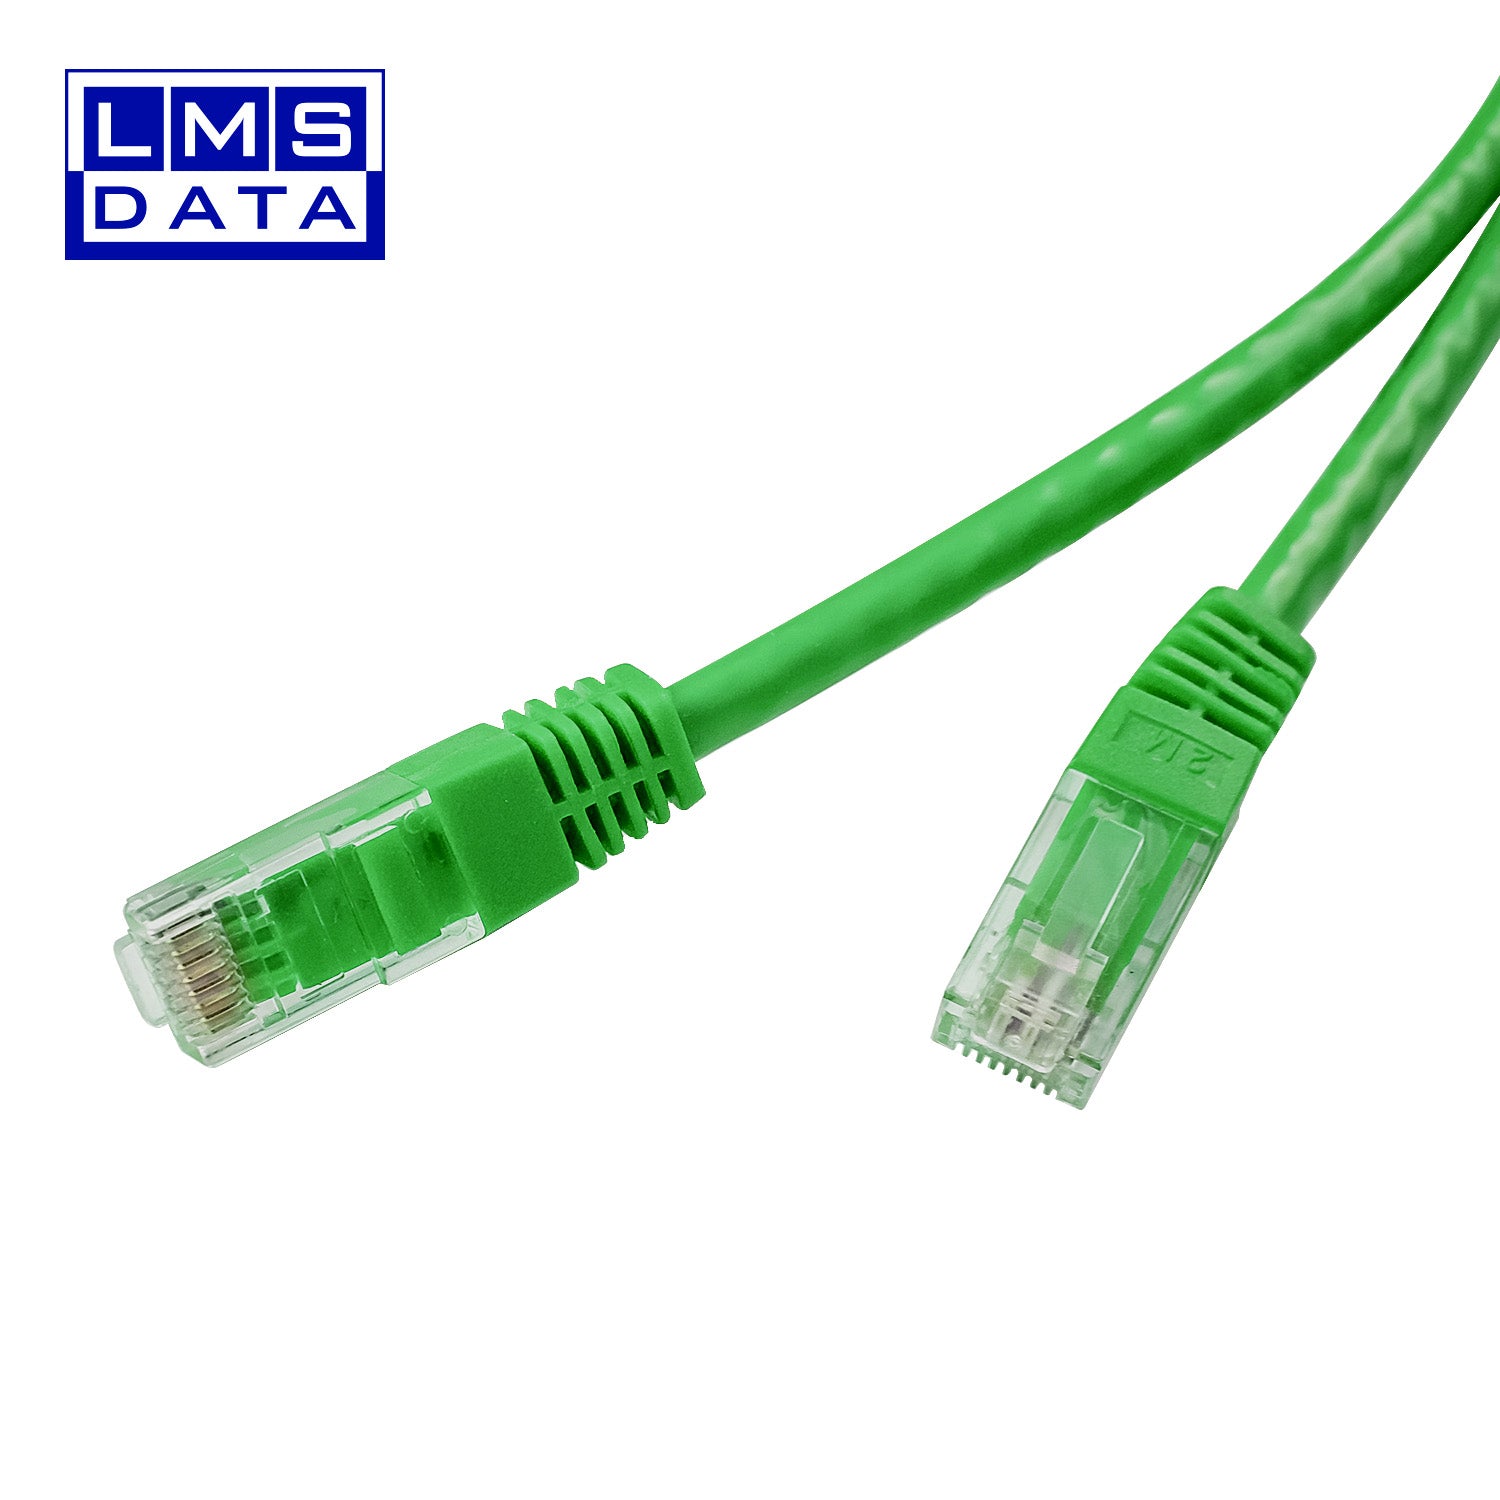 cable rj45 cat 5e 20m green colour